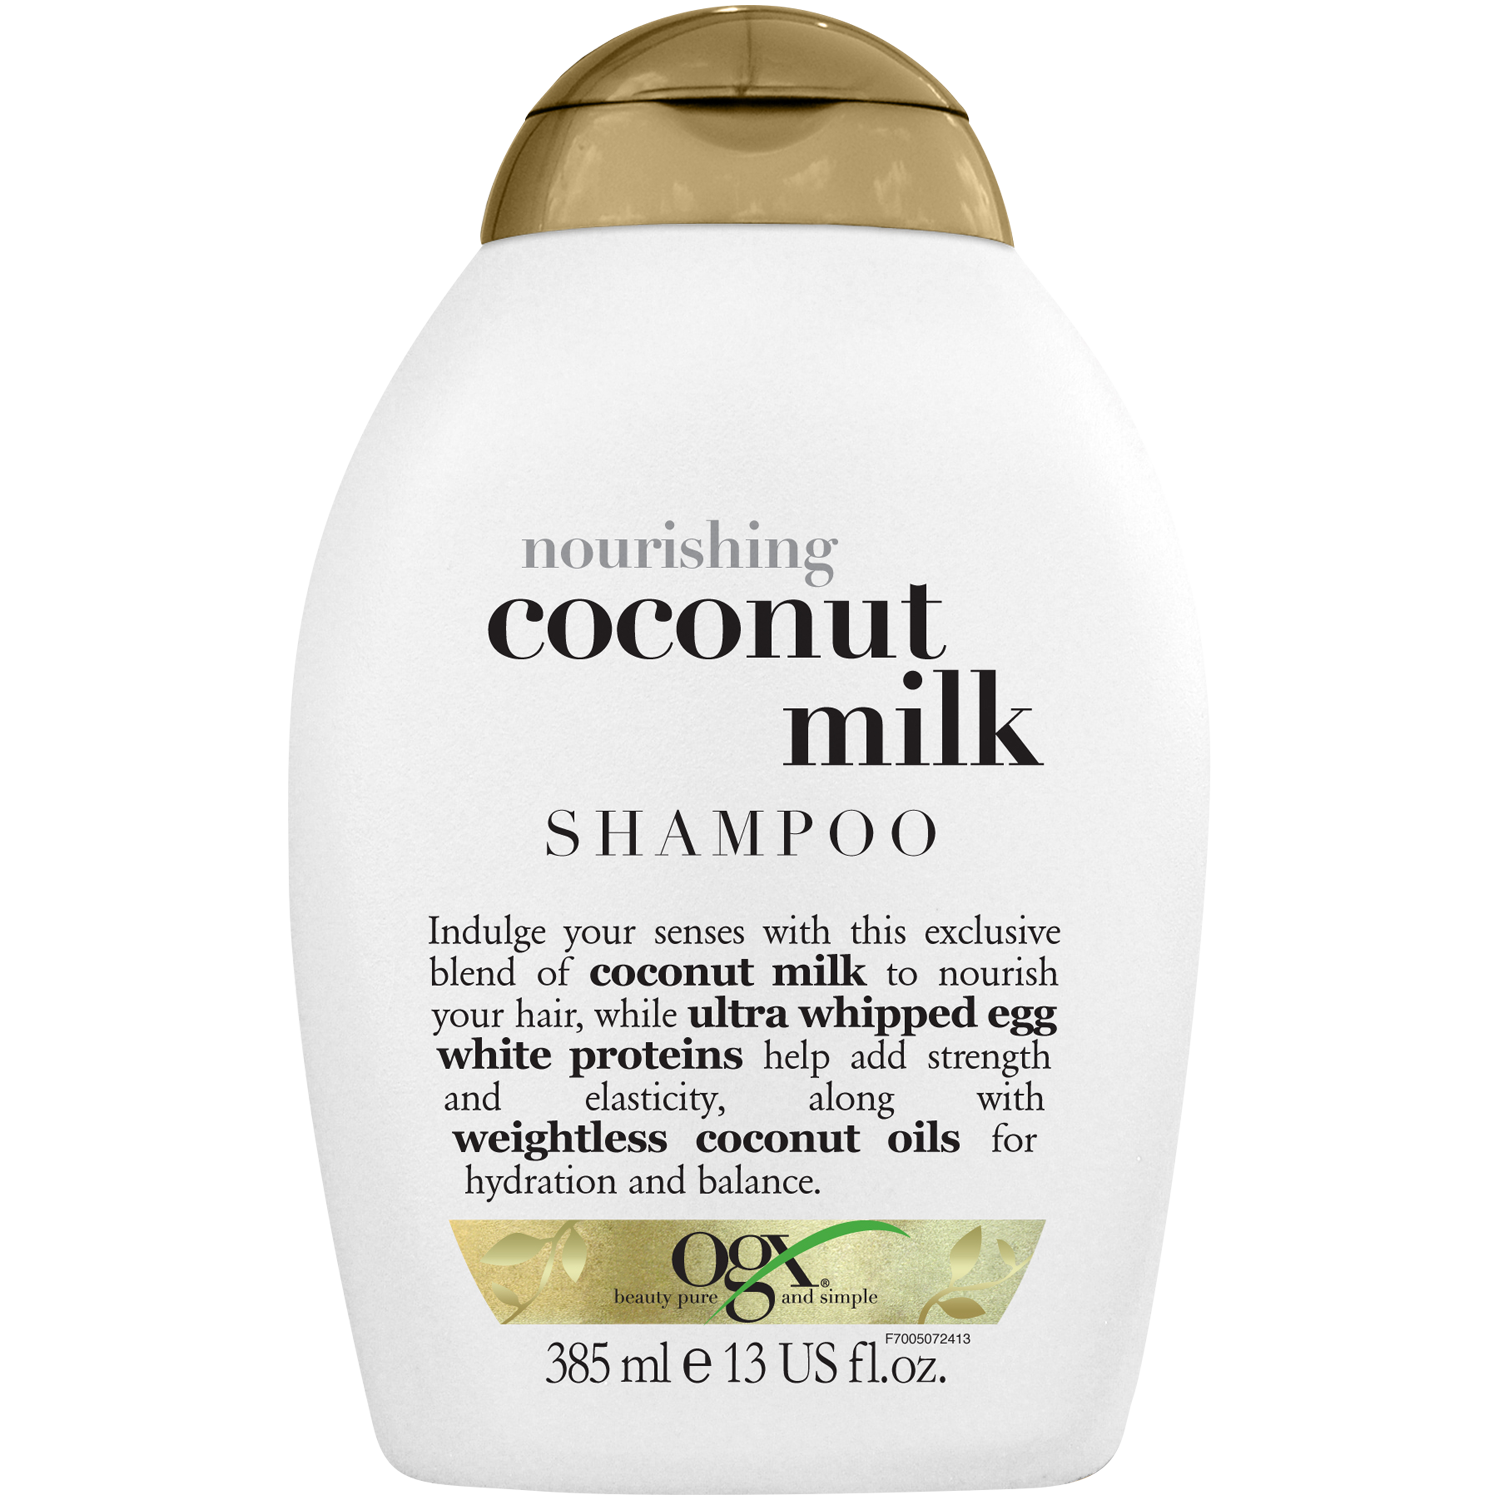 Ogx Coconut Milk питательный шампунь для волос, 385 мл ogx питательный шампунь nourishing coconut milk 385 мл